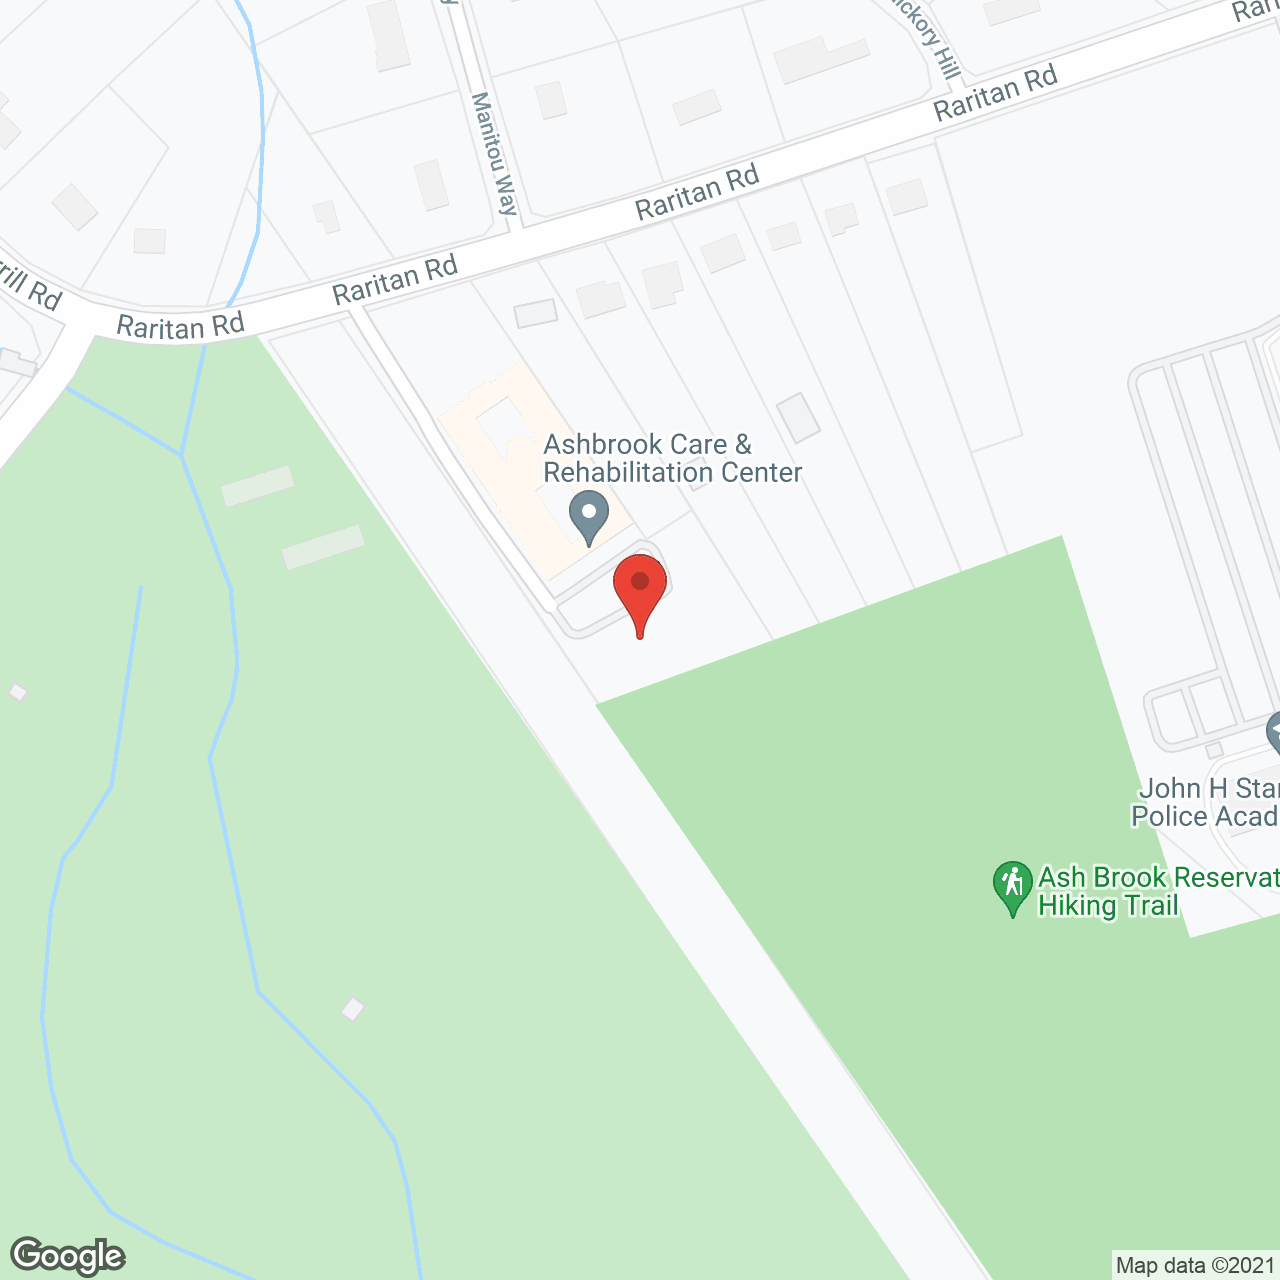 Ashbrook Care & Rehabilitation Center in google map